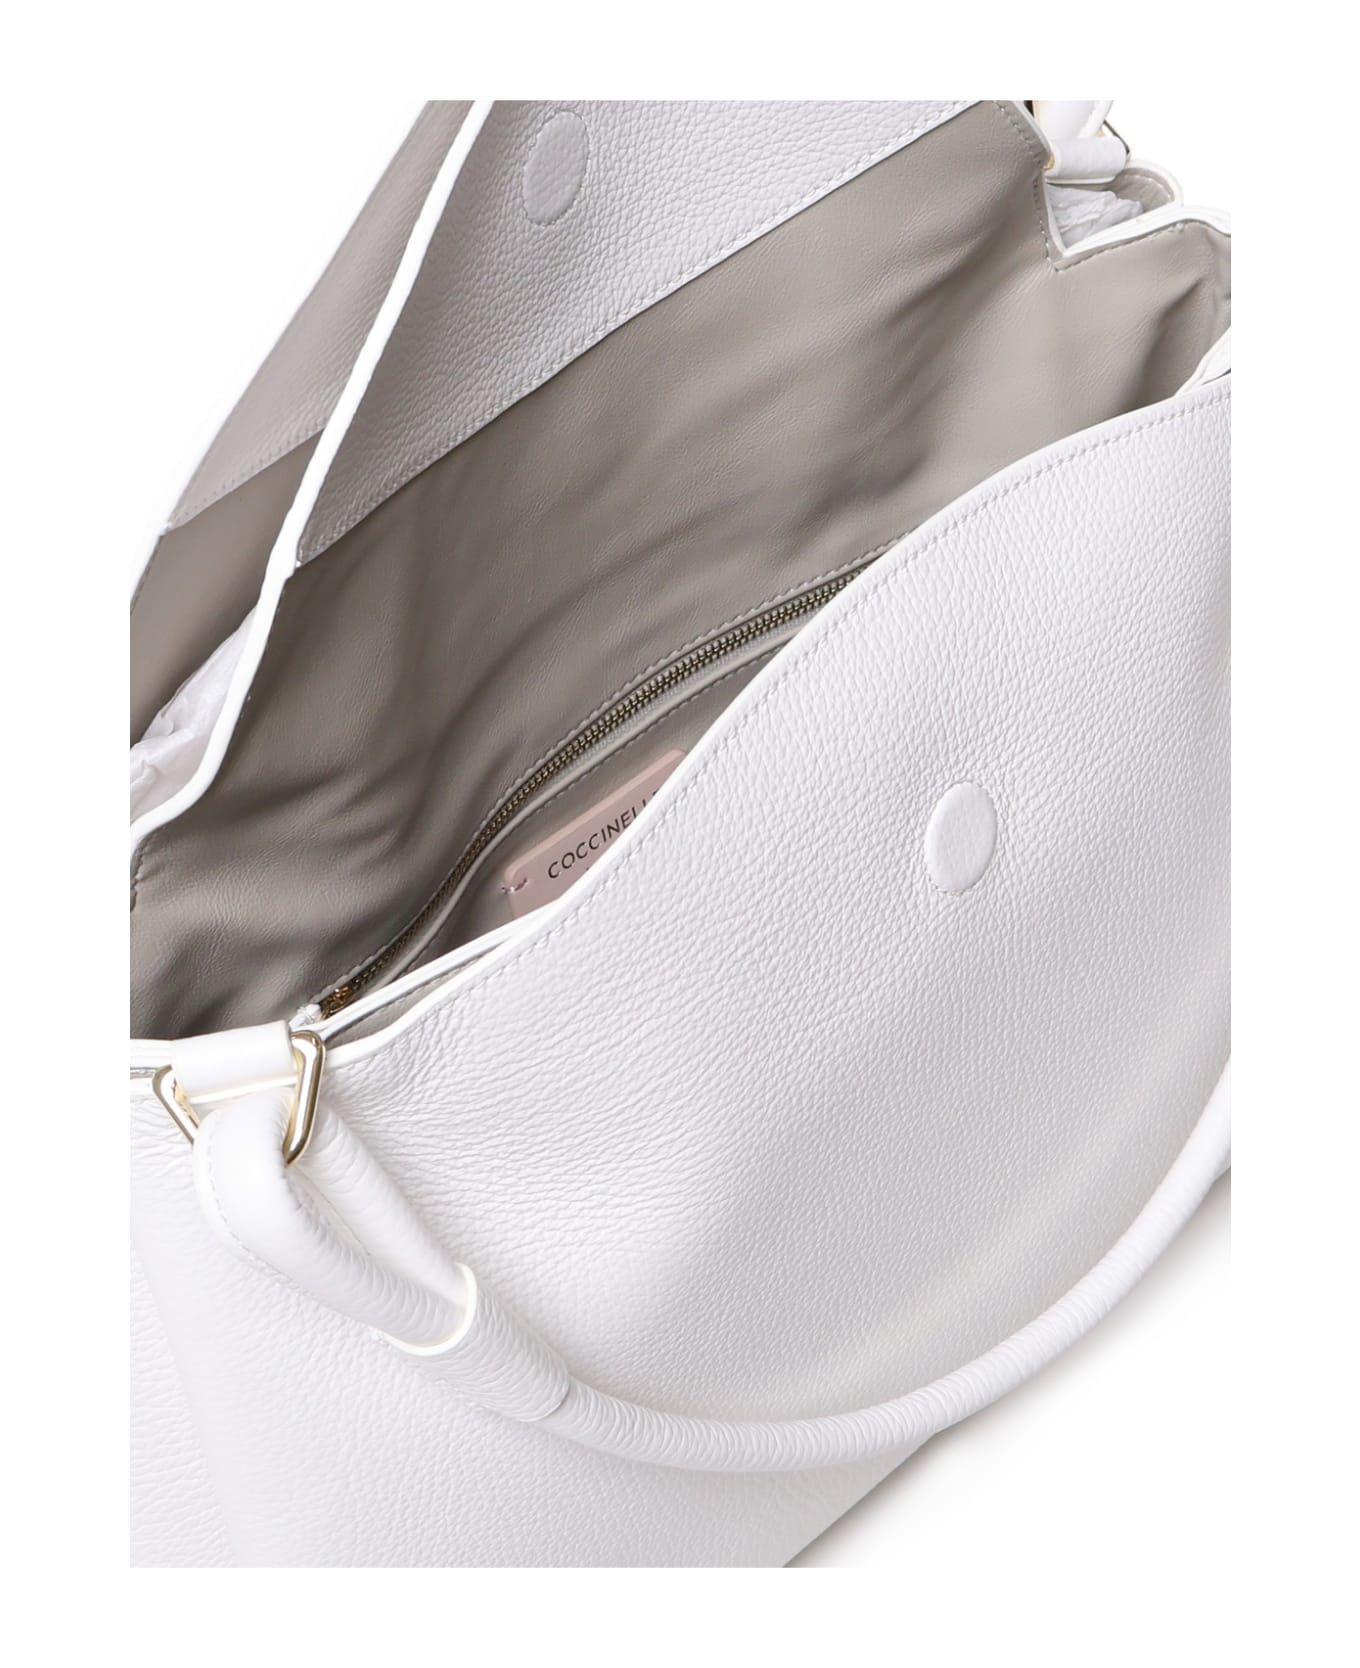 Coccinelle Eclyps Medium Bag - White